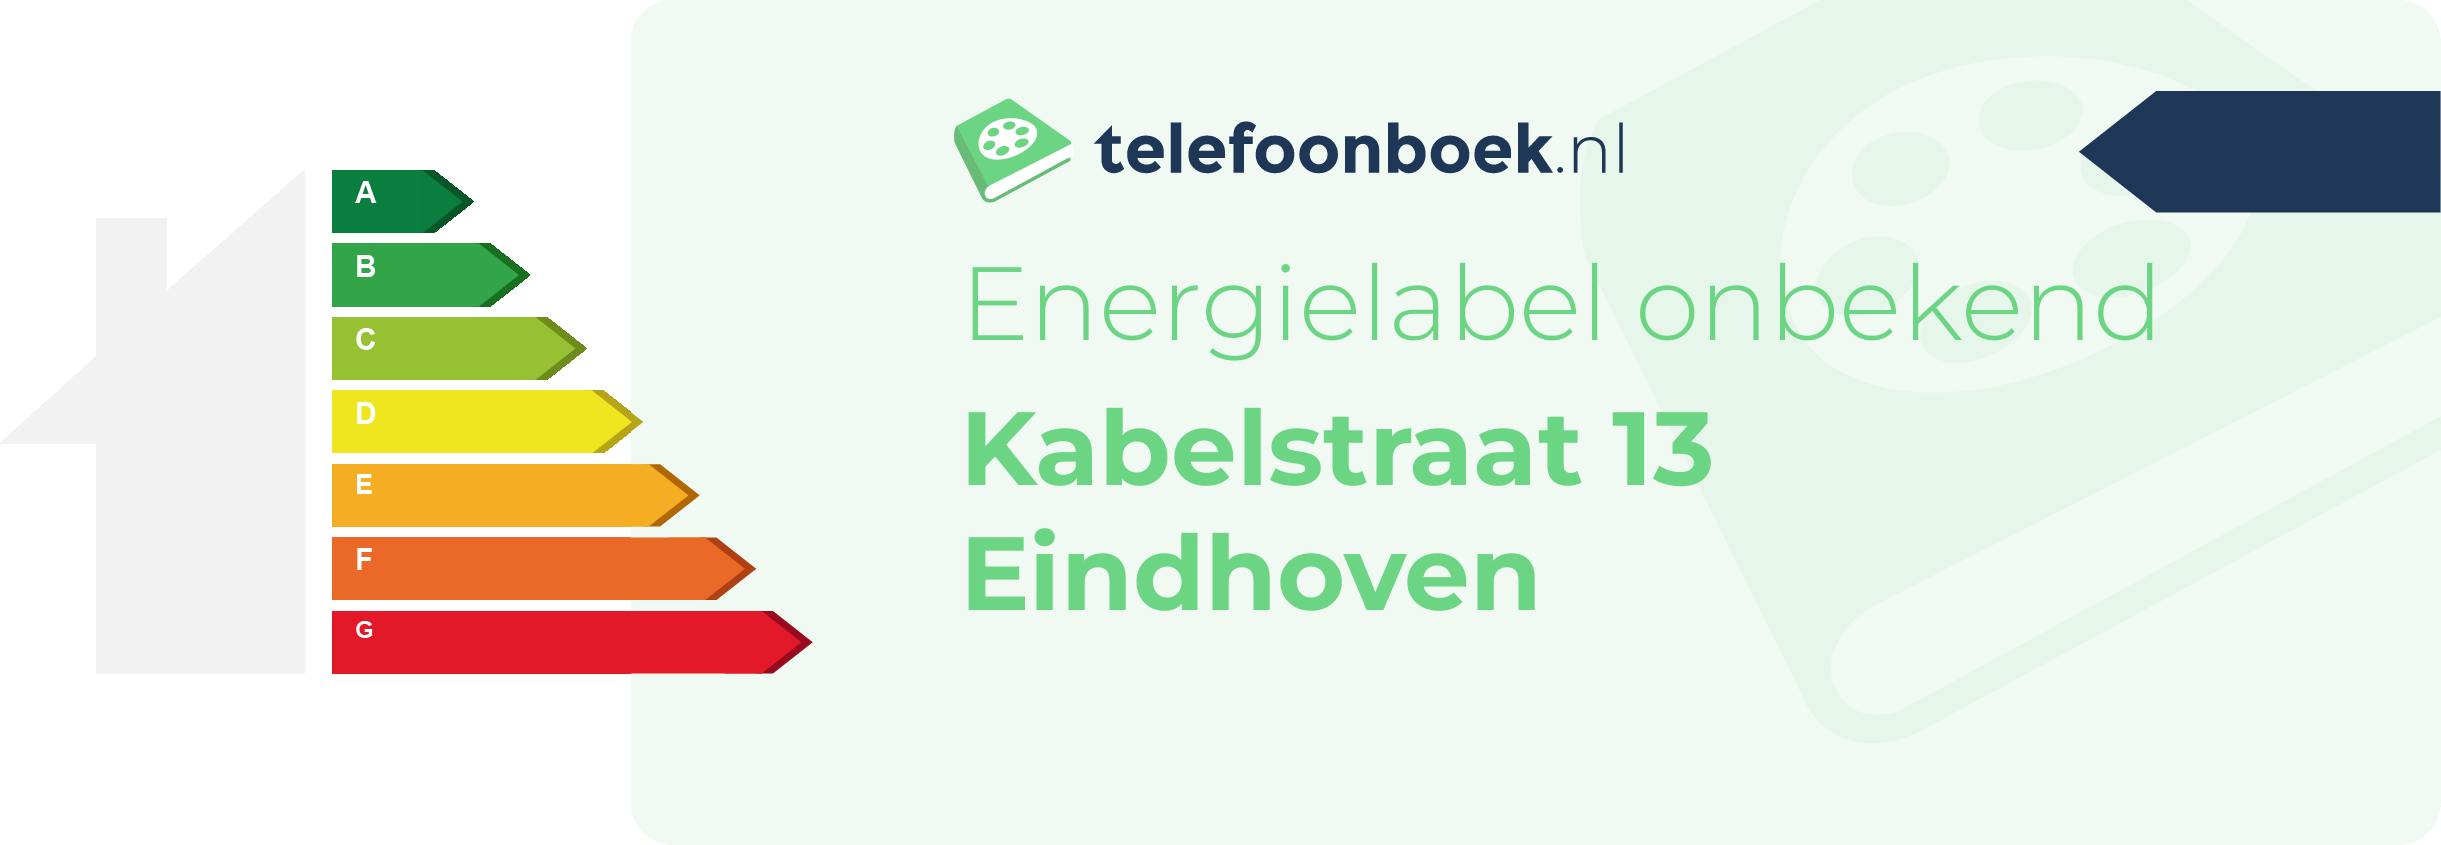 Energielabel Kabelstraat 13 Eindhoven